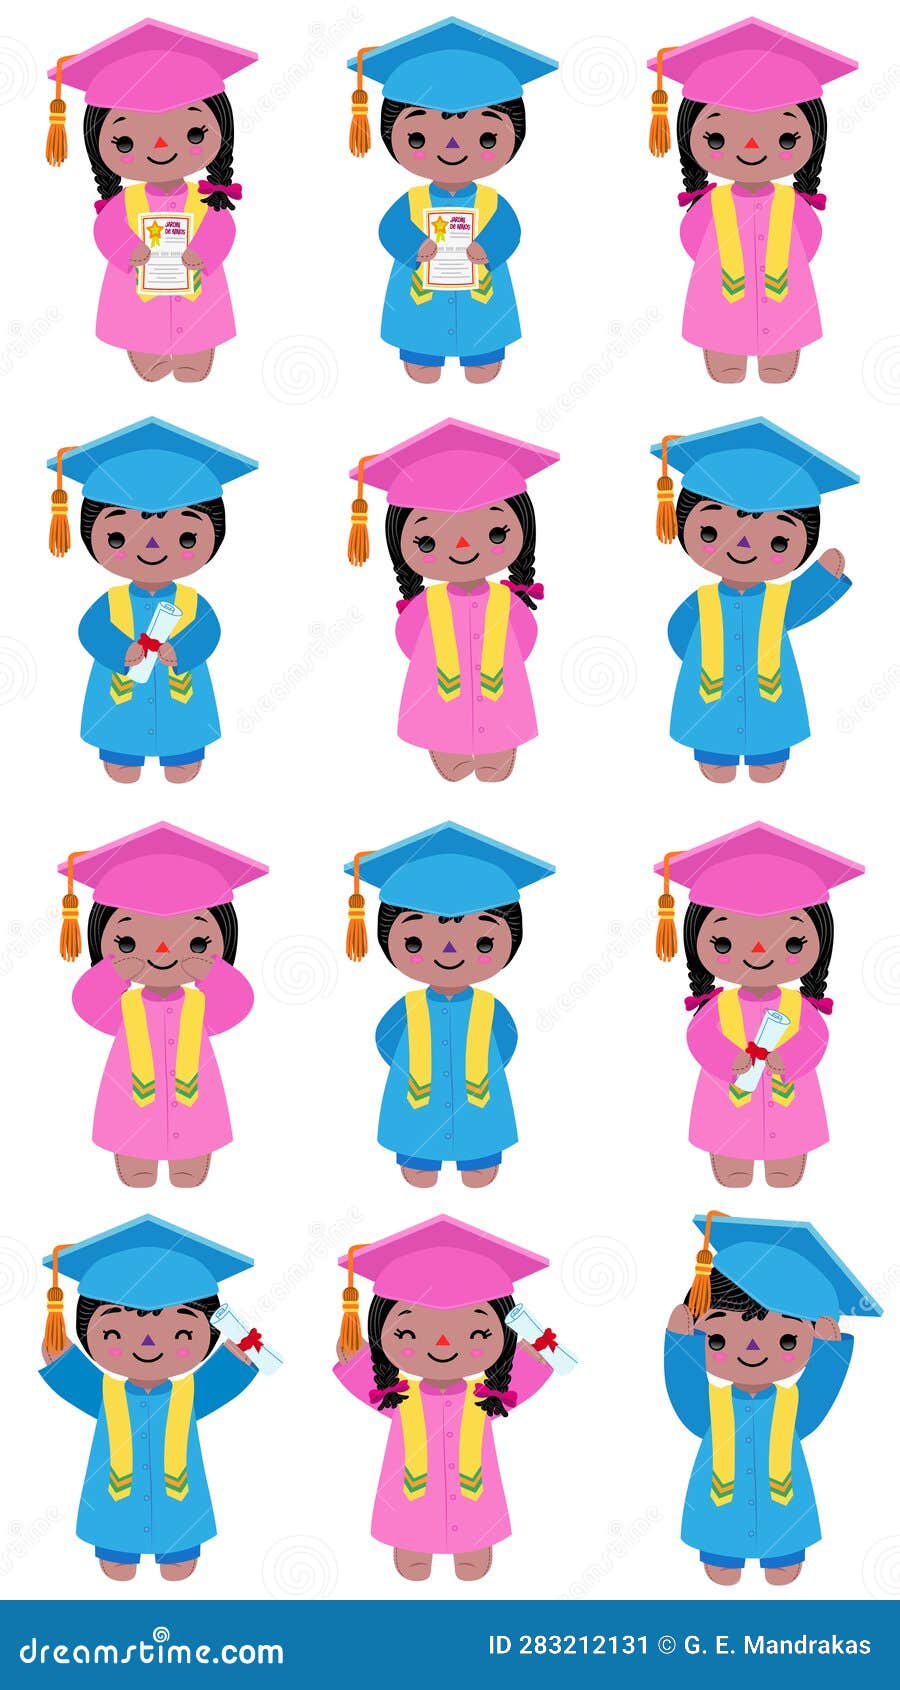 Kid cap and gown 2022 kids graduation gown Graduation Gown Kids Costume Kids  | eBay